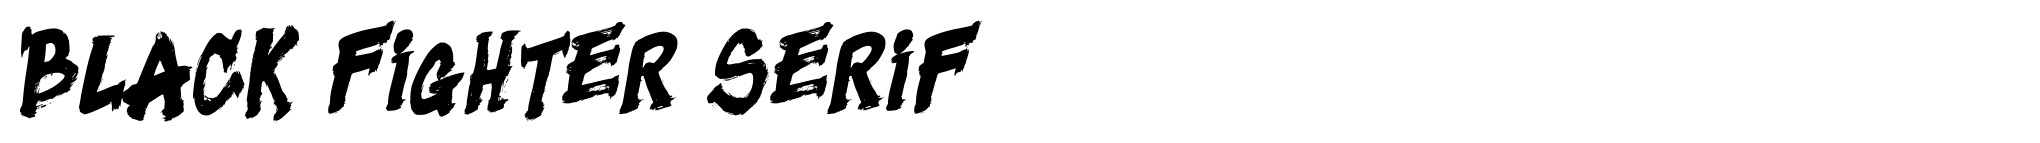 Black Fighter Serif image